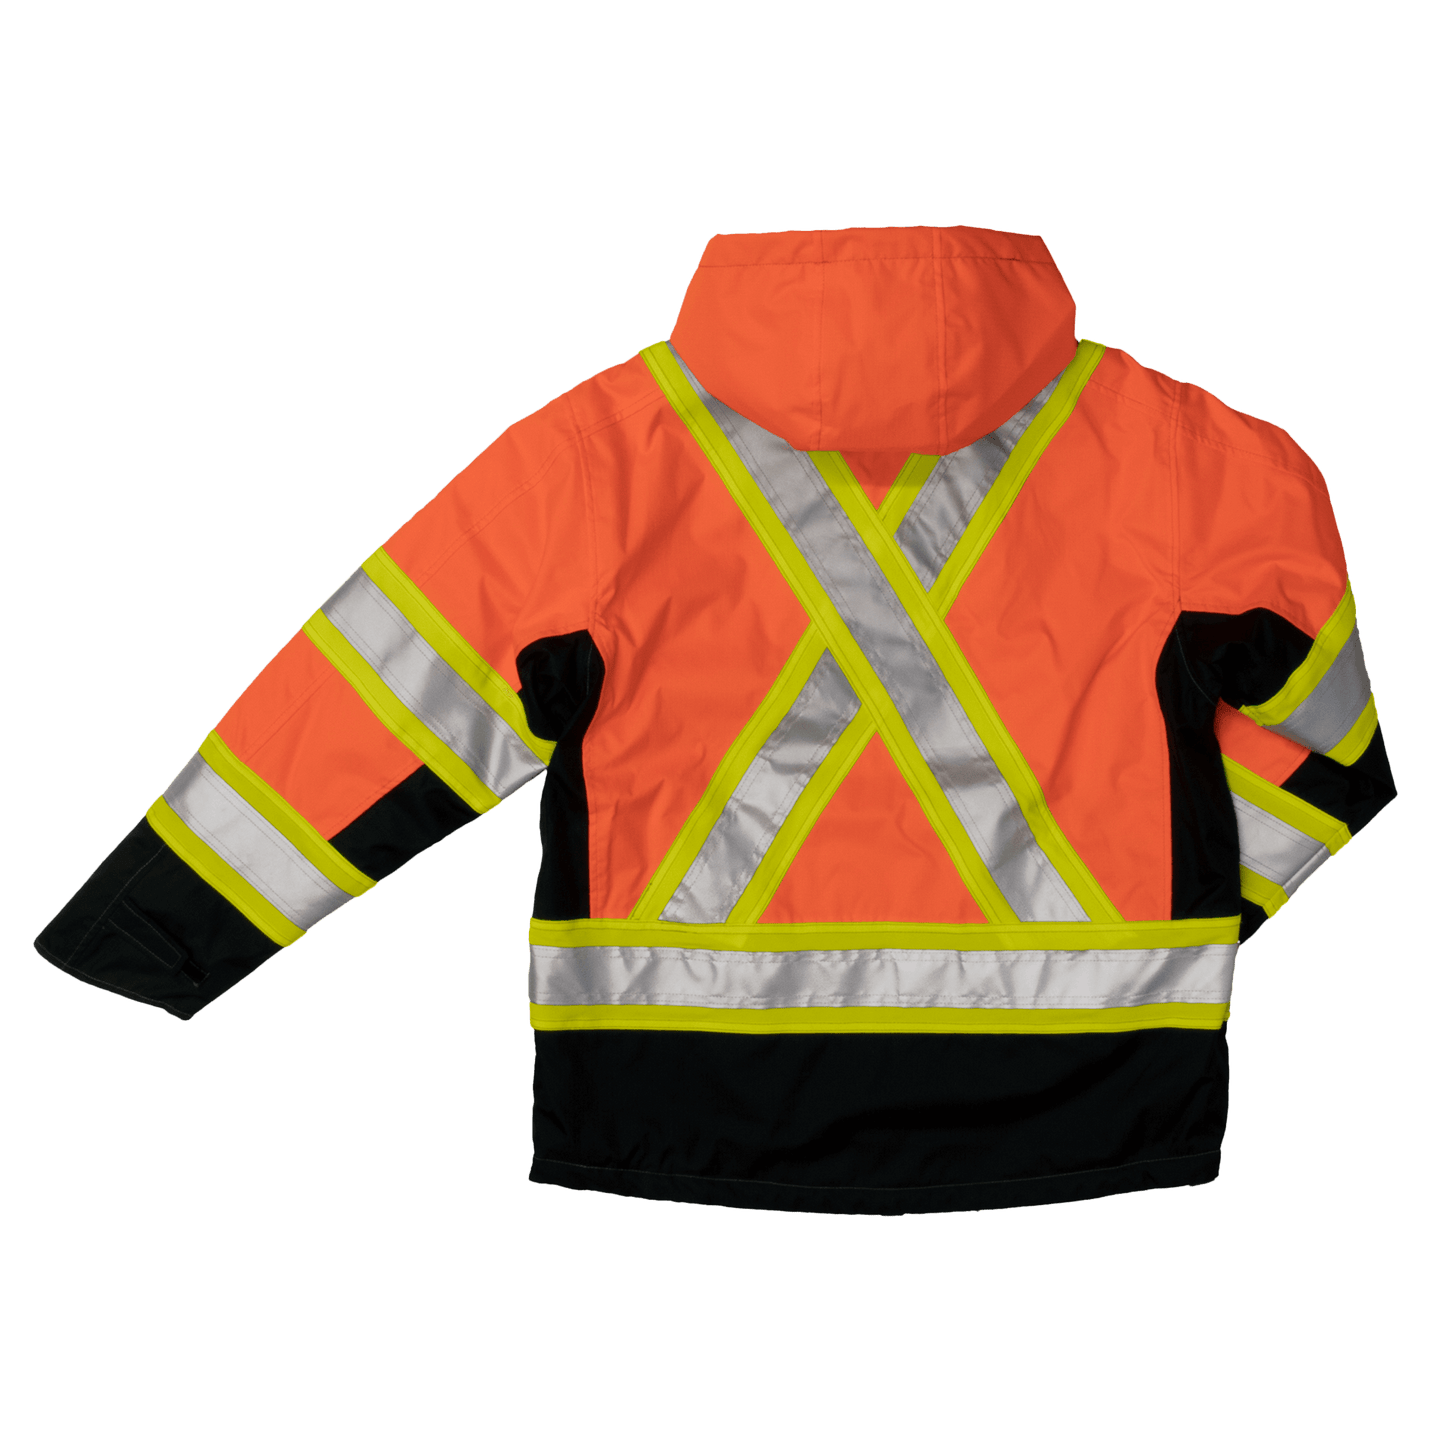 Tough Duck Fleece Lined Safety Jacket - S245 - Fluorescent Orange - back